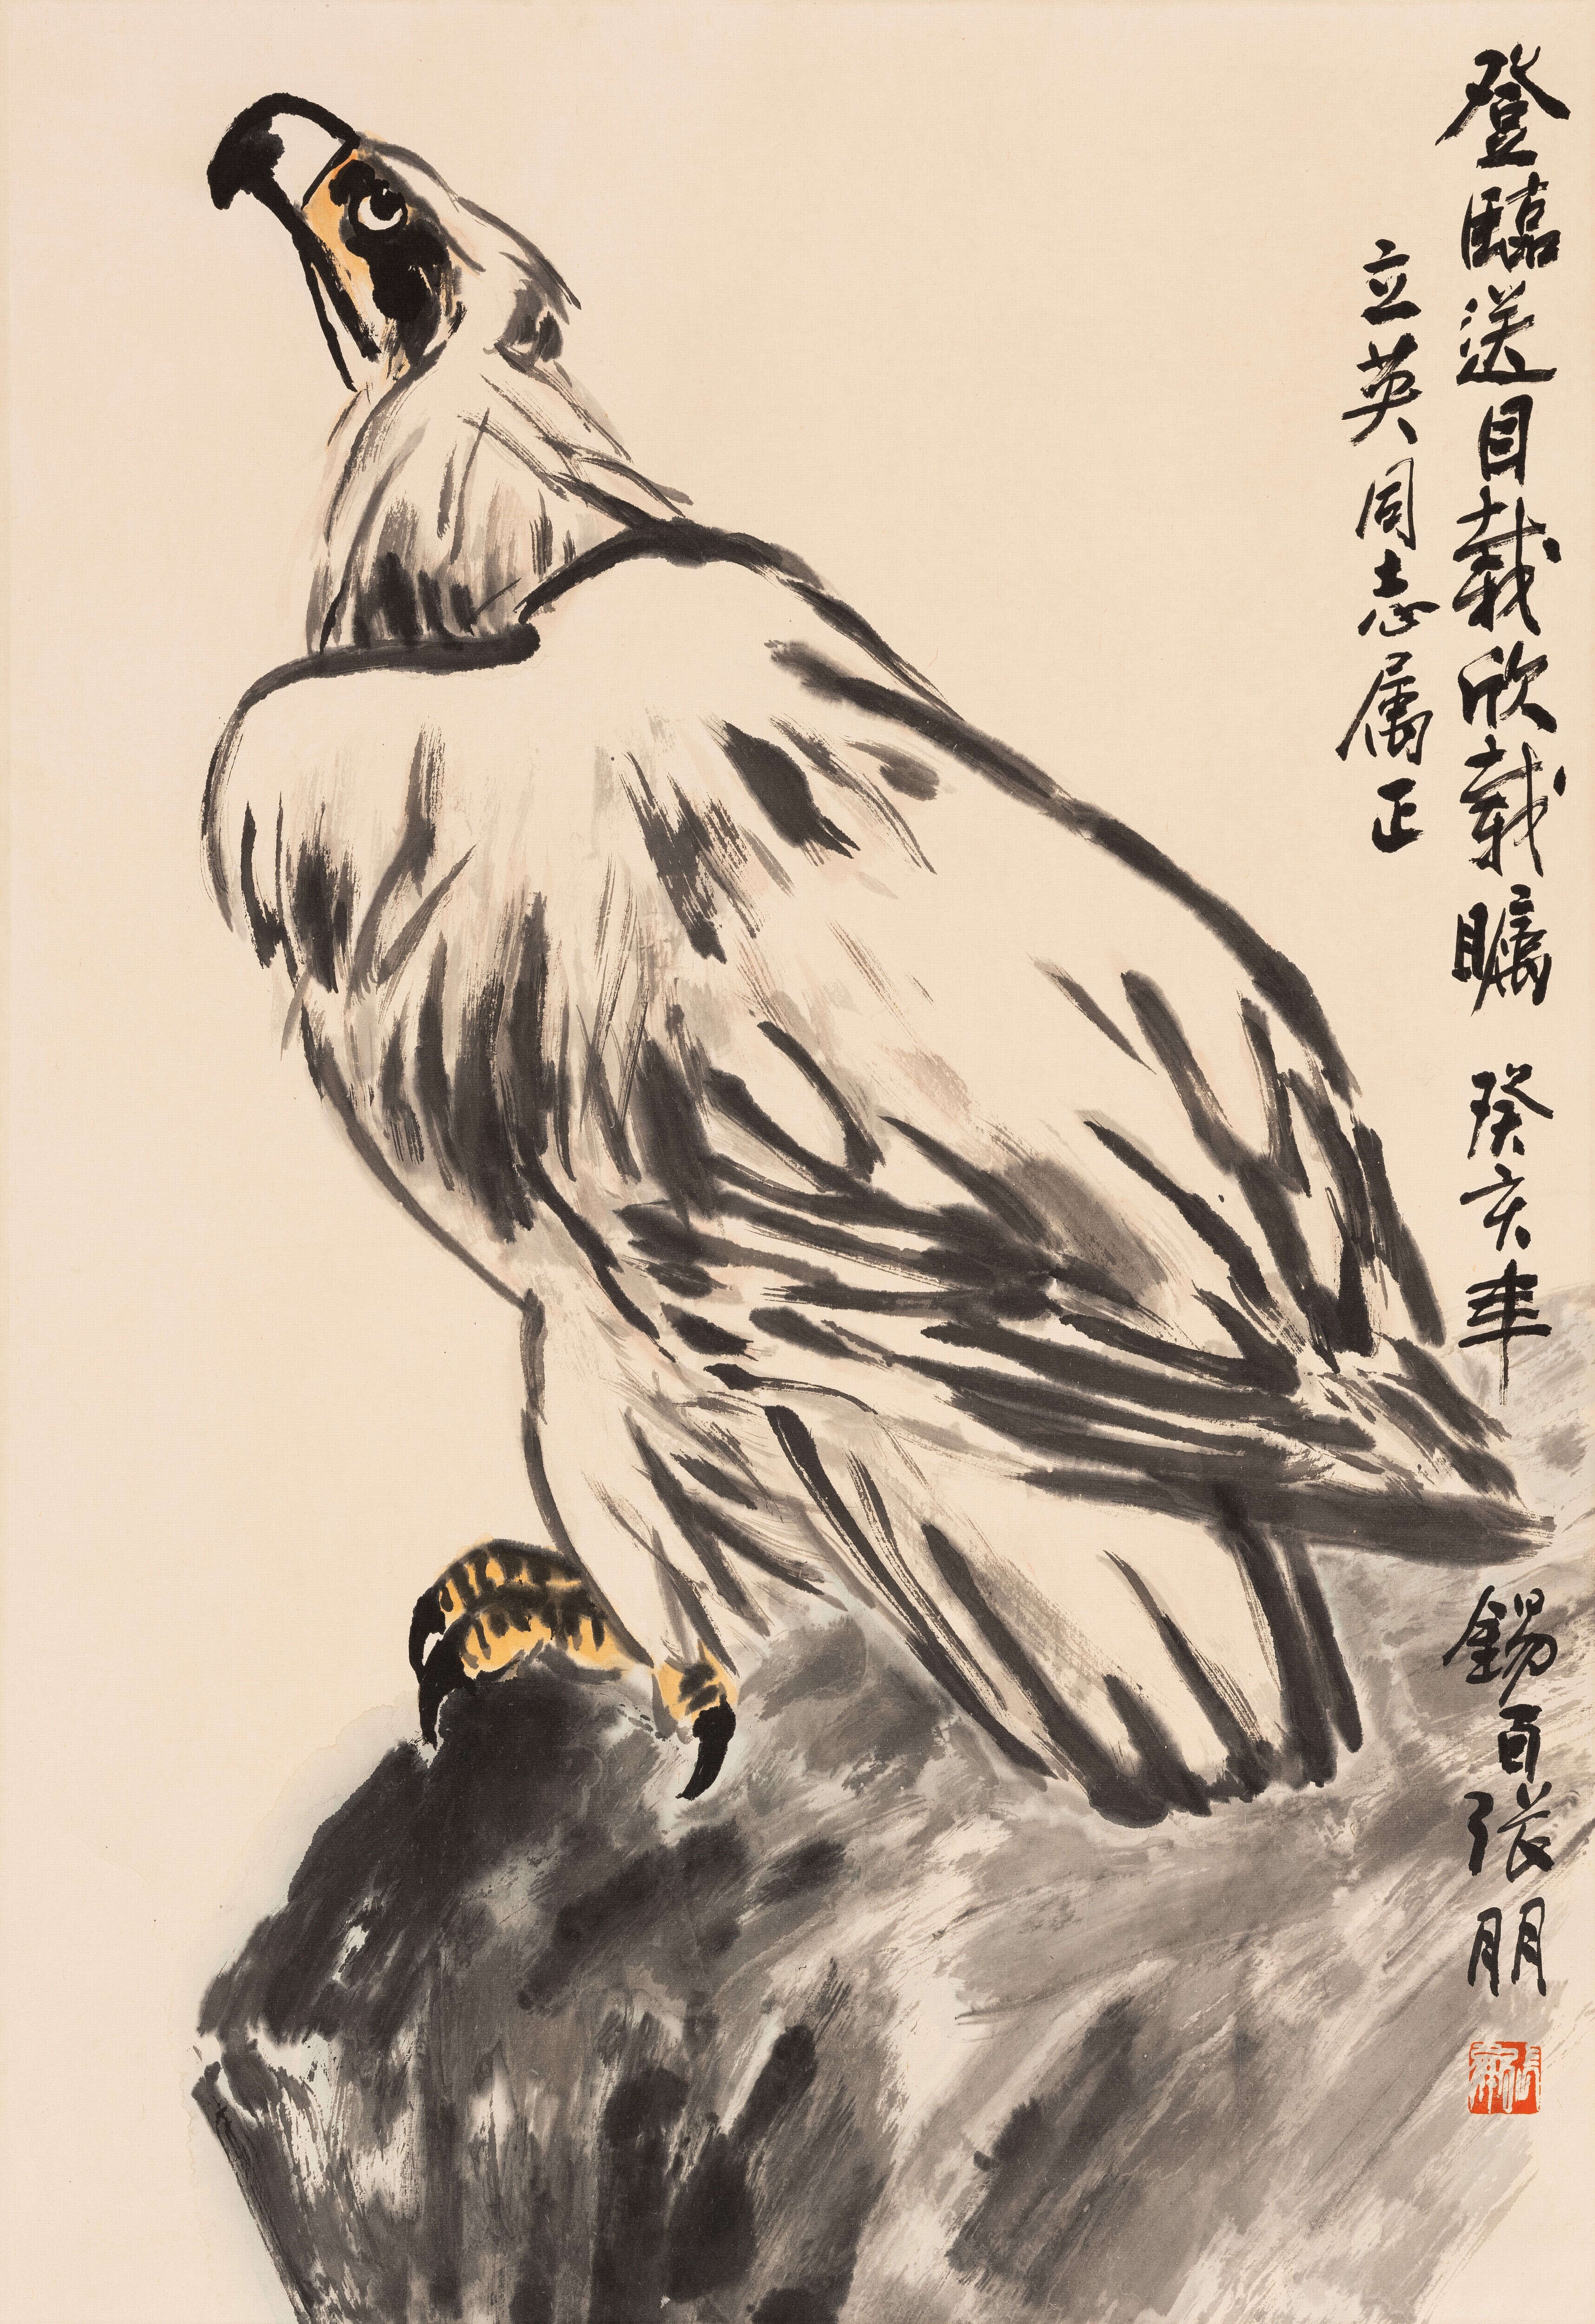 Goshawk illustration by Zhang Peng, 1983